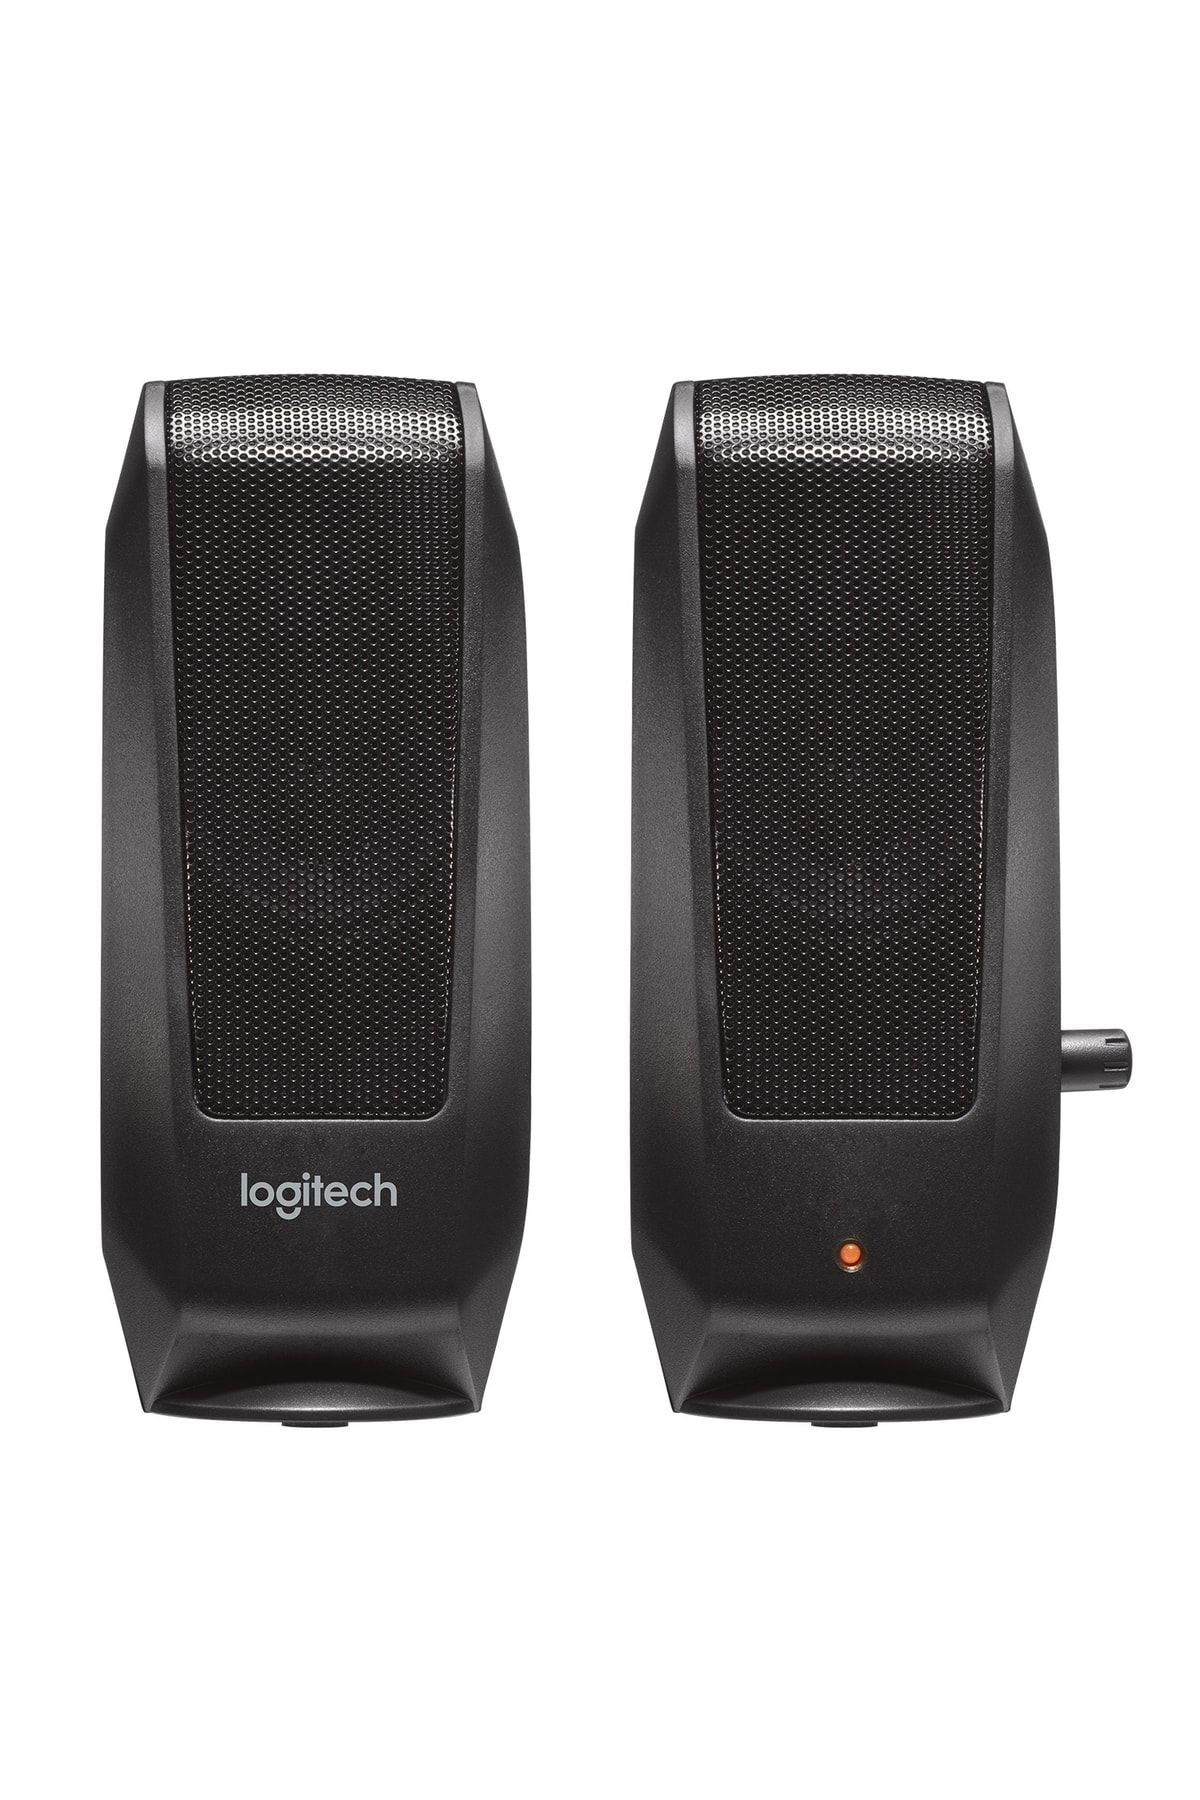 logitech S120 2.0 Stereo Hoparlör - Siyah